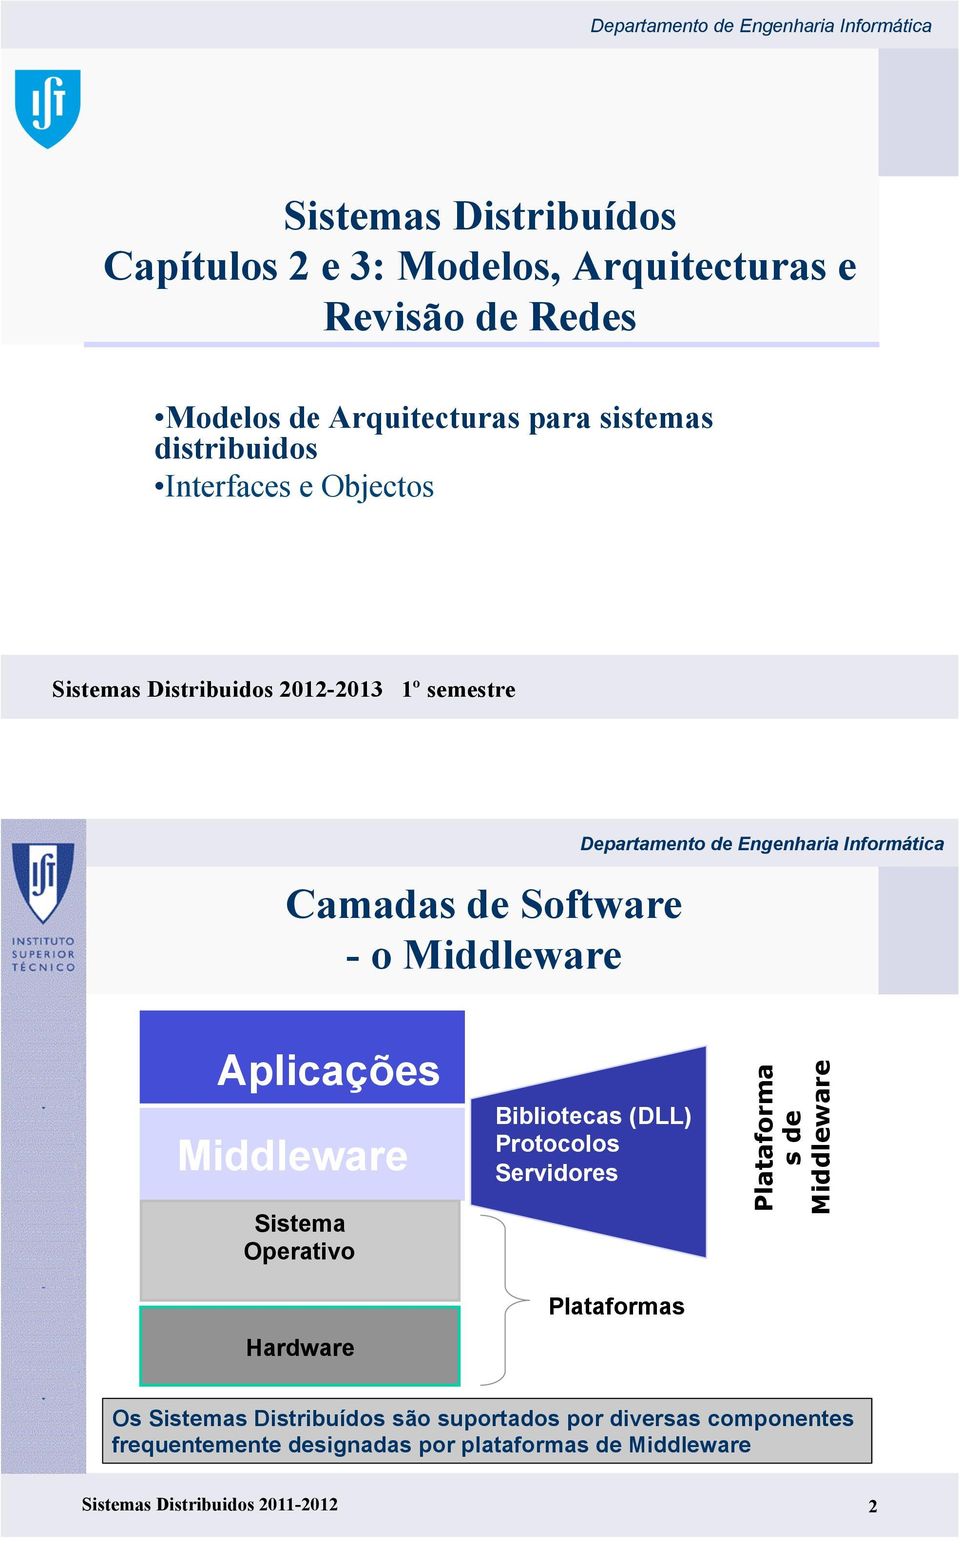 Middleware Sistema Operativo Hardware Bibliotecas (DLL) Protocolos Servidores Plataformas Plataforma s de Middleware Os Sistemas